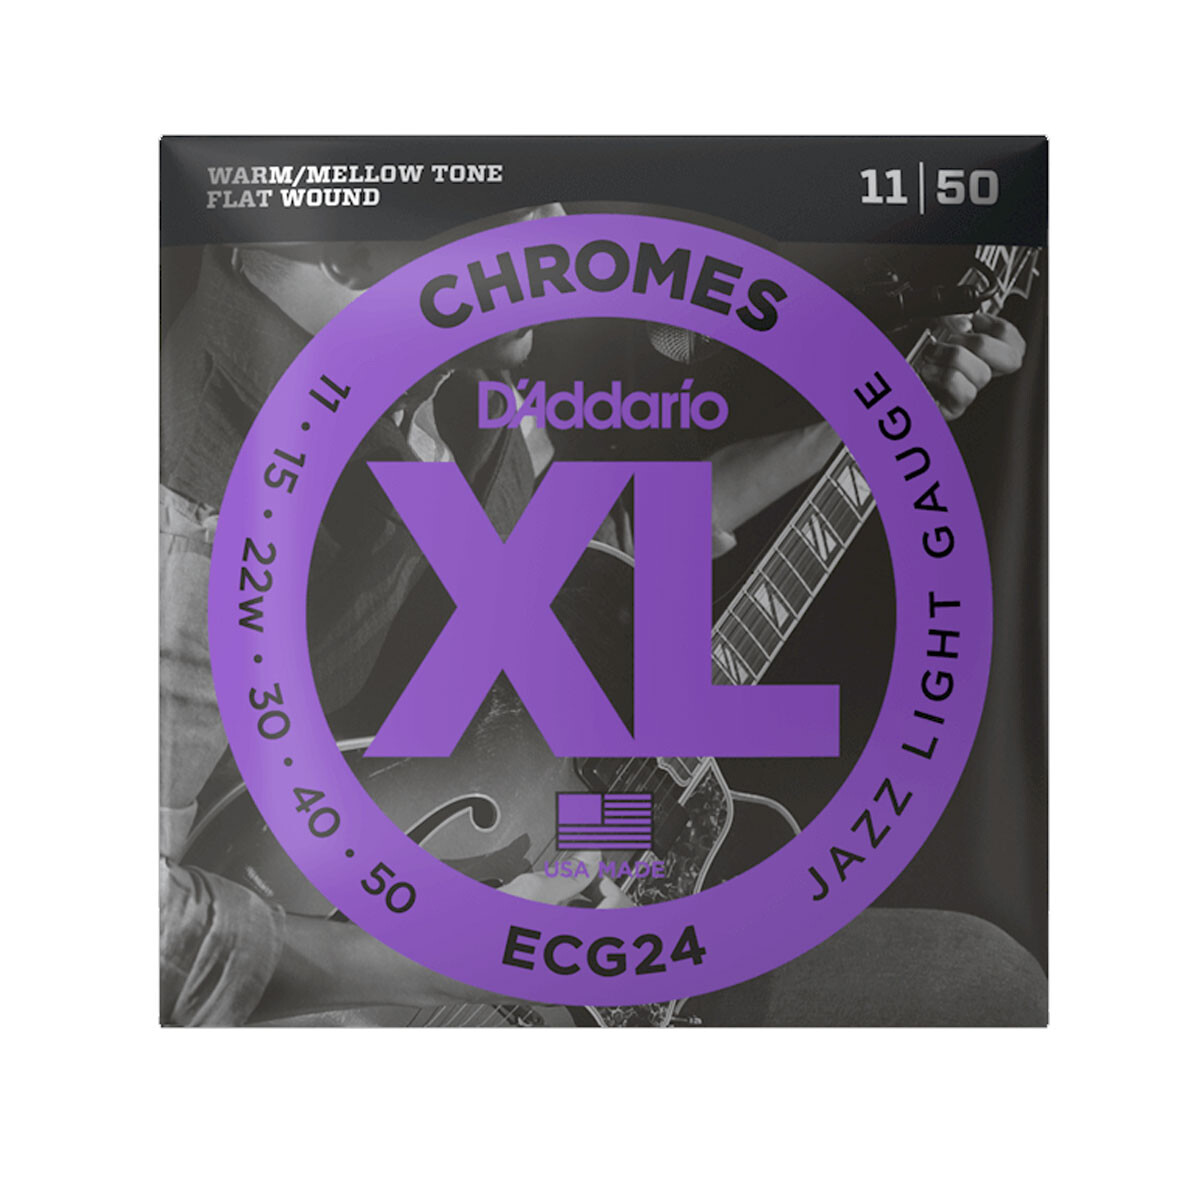 Encordado Electrica Daddario Ecg24 Chromes 011 